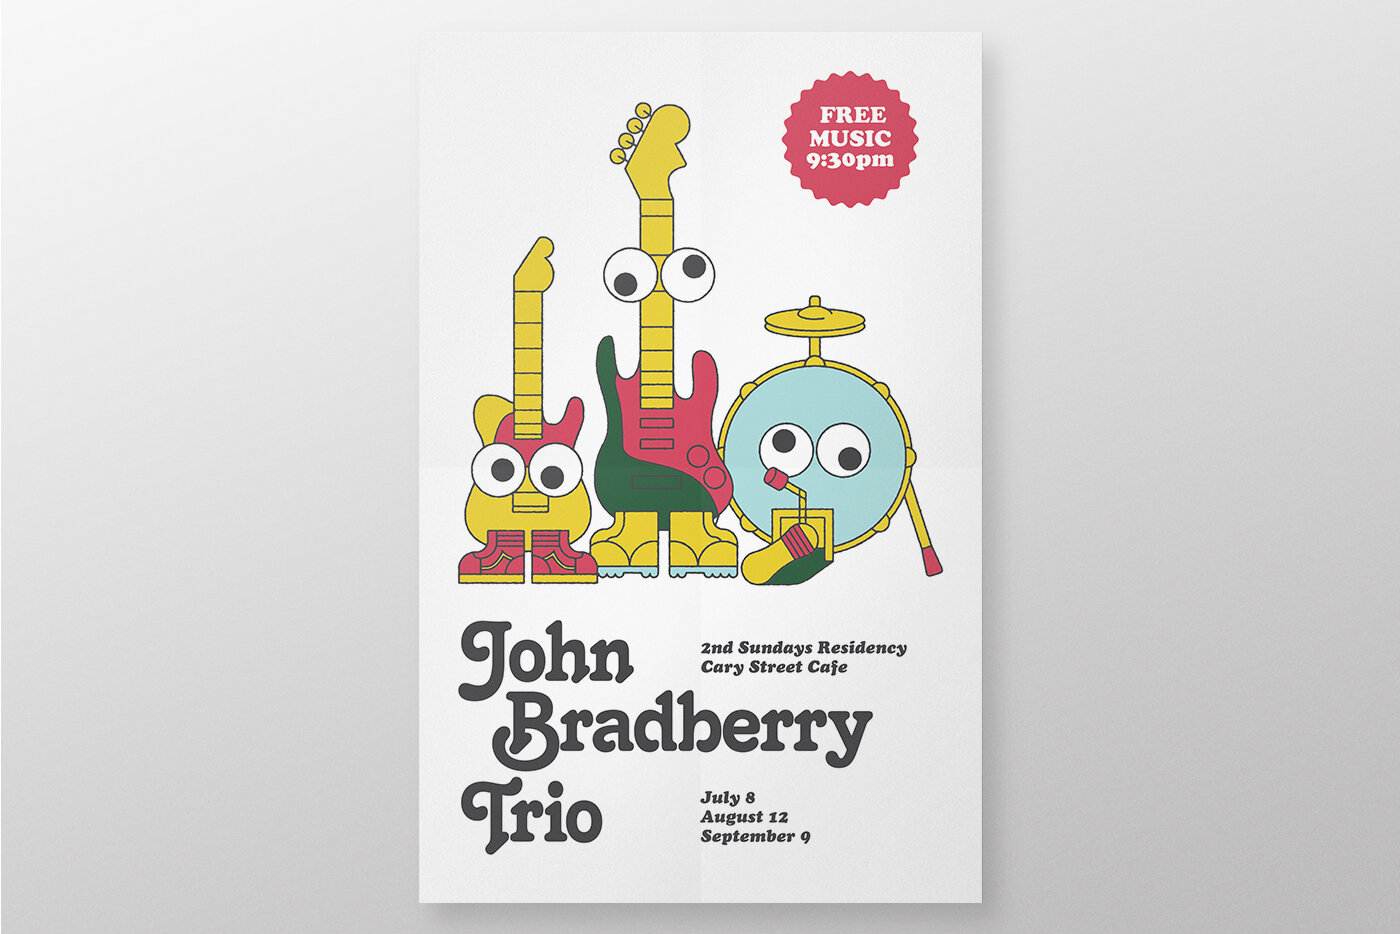 John Bradberry Trio Poster 